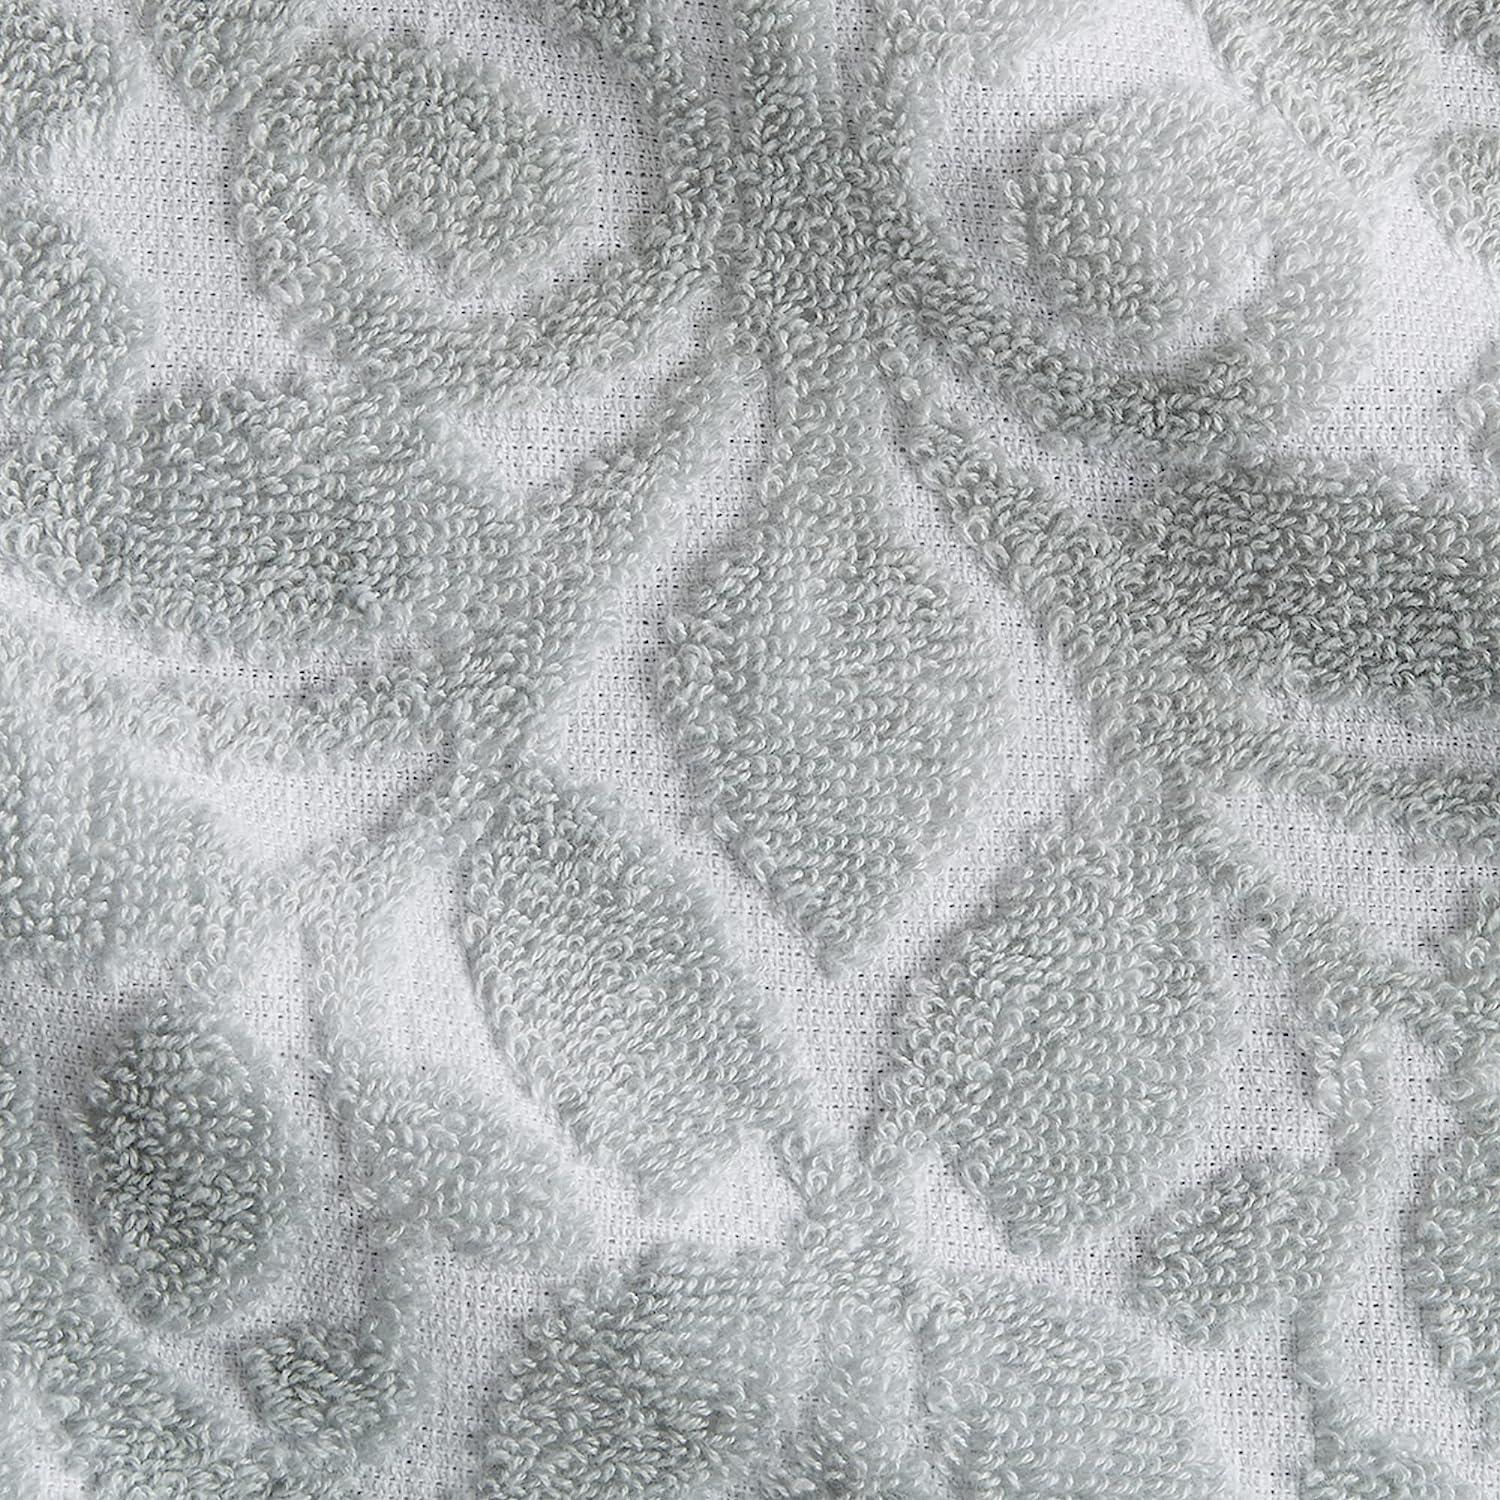 Jacquard-patterned bath towel - Dark grey - Home All